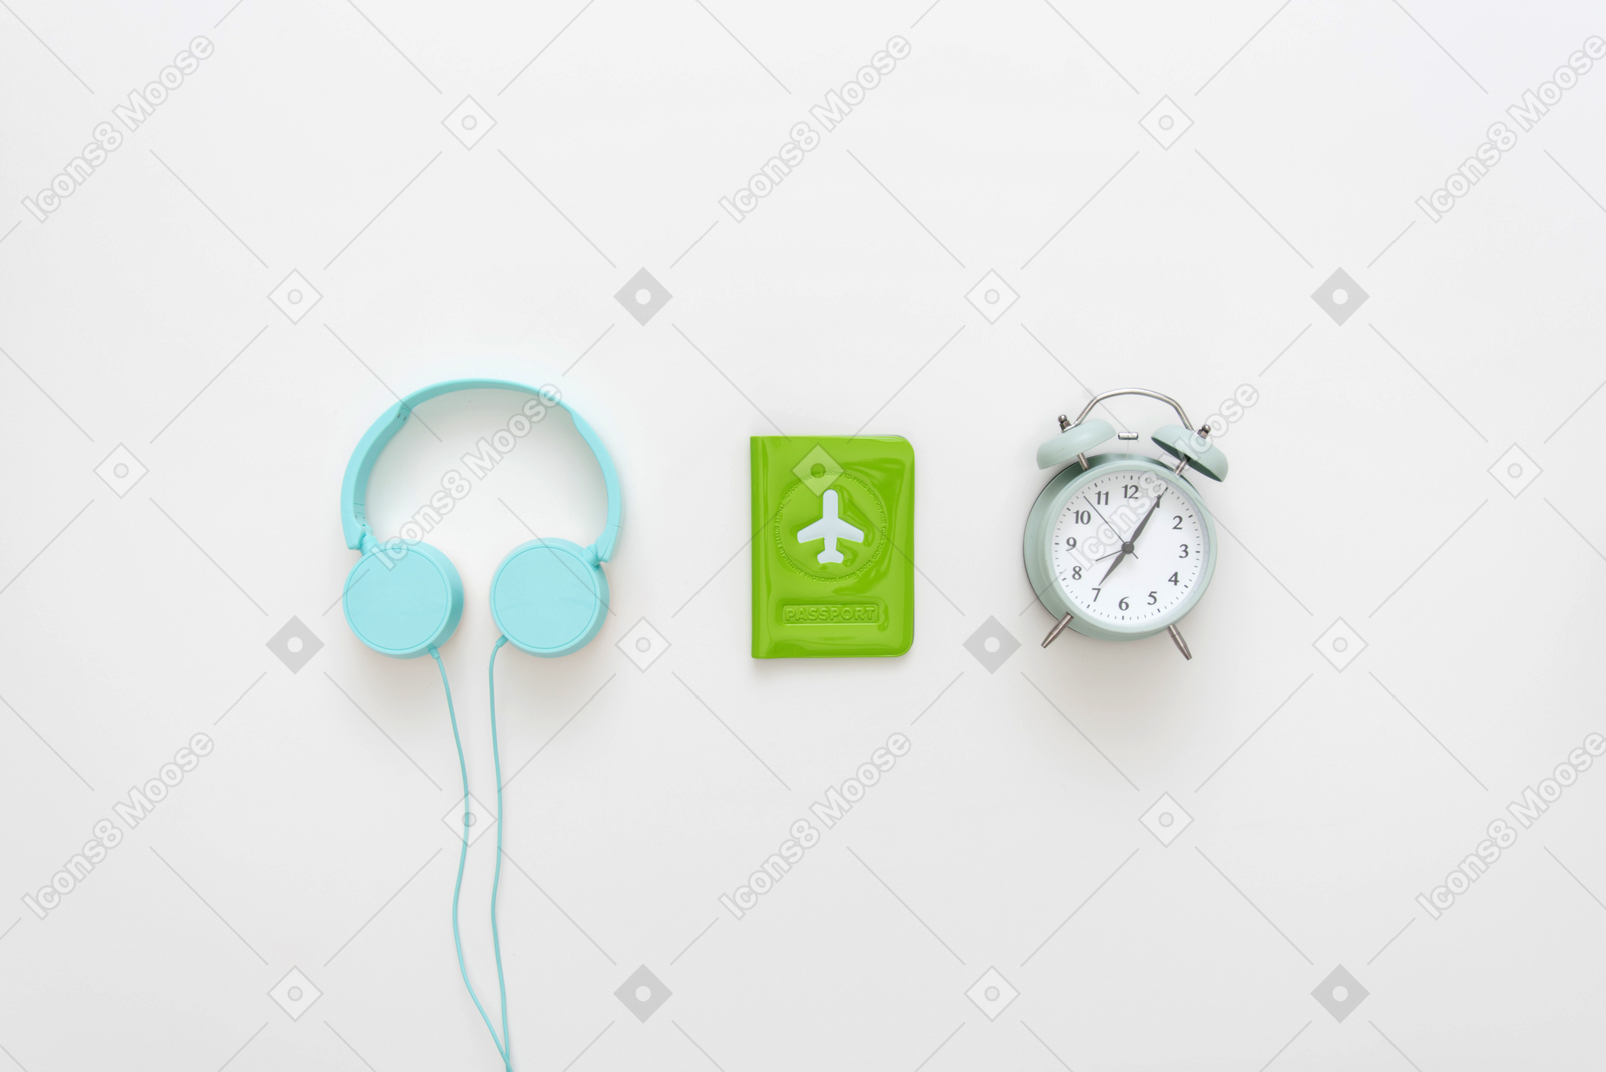 Blue headphones, passport cover and alarm clock